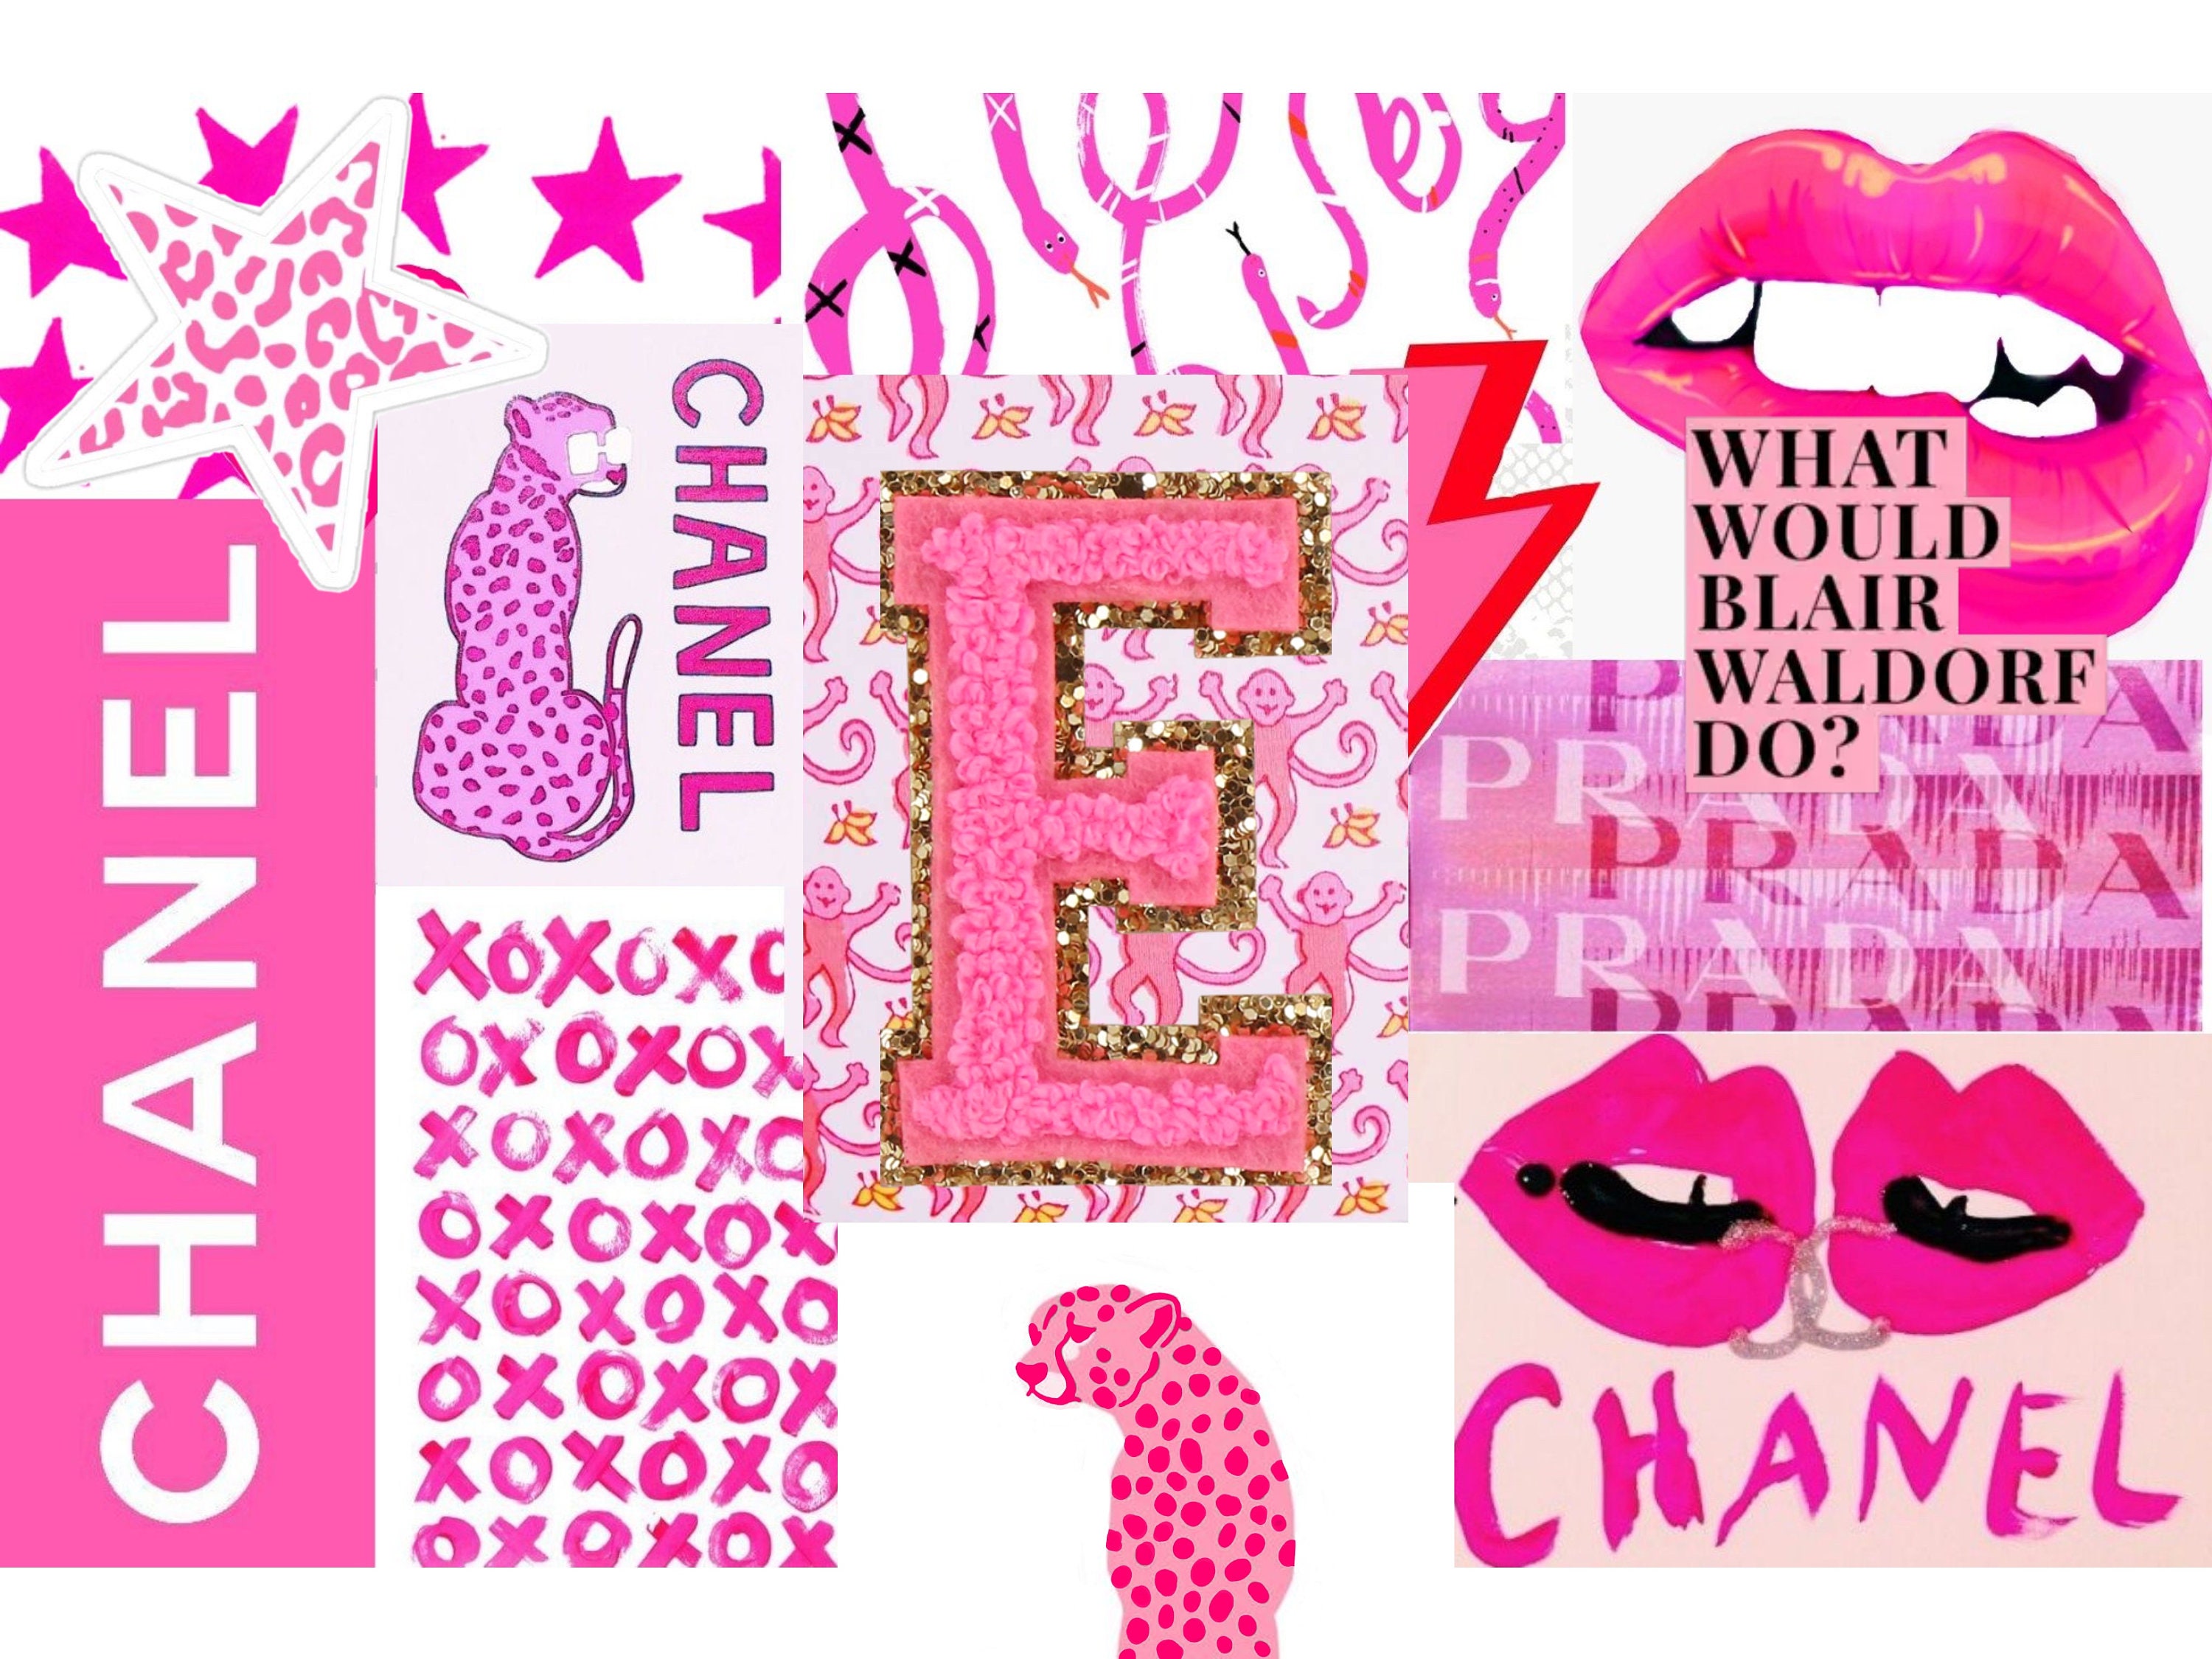 Pink leopard print  Iphone wallpaper preppy Pink wallpaper backgrounds Preppy  wallpaper